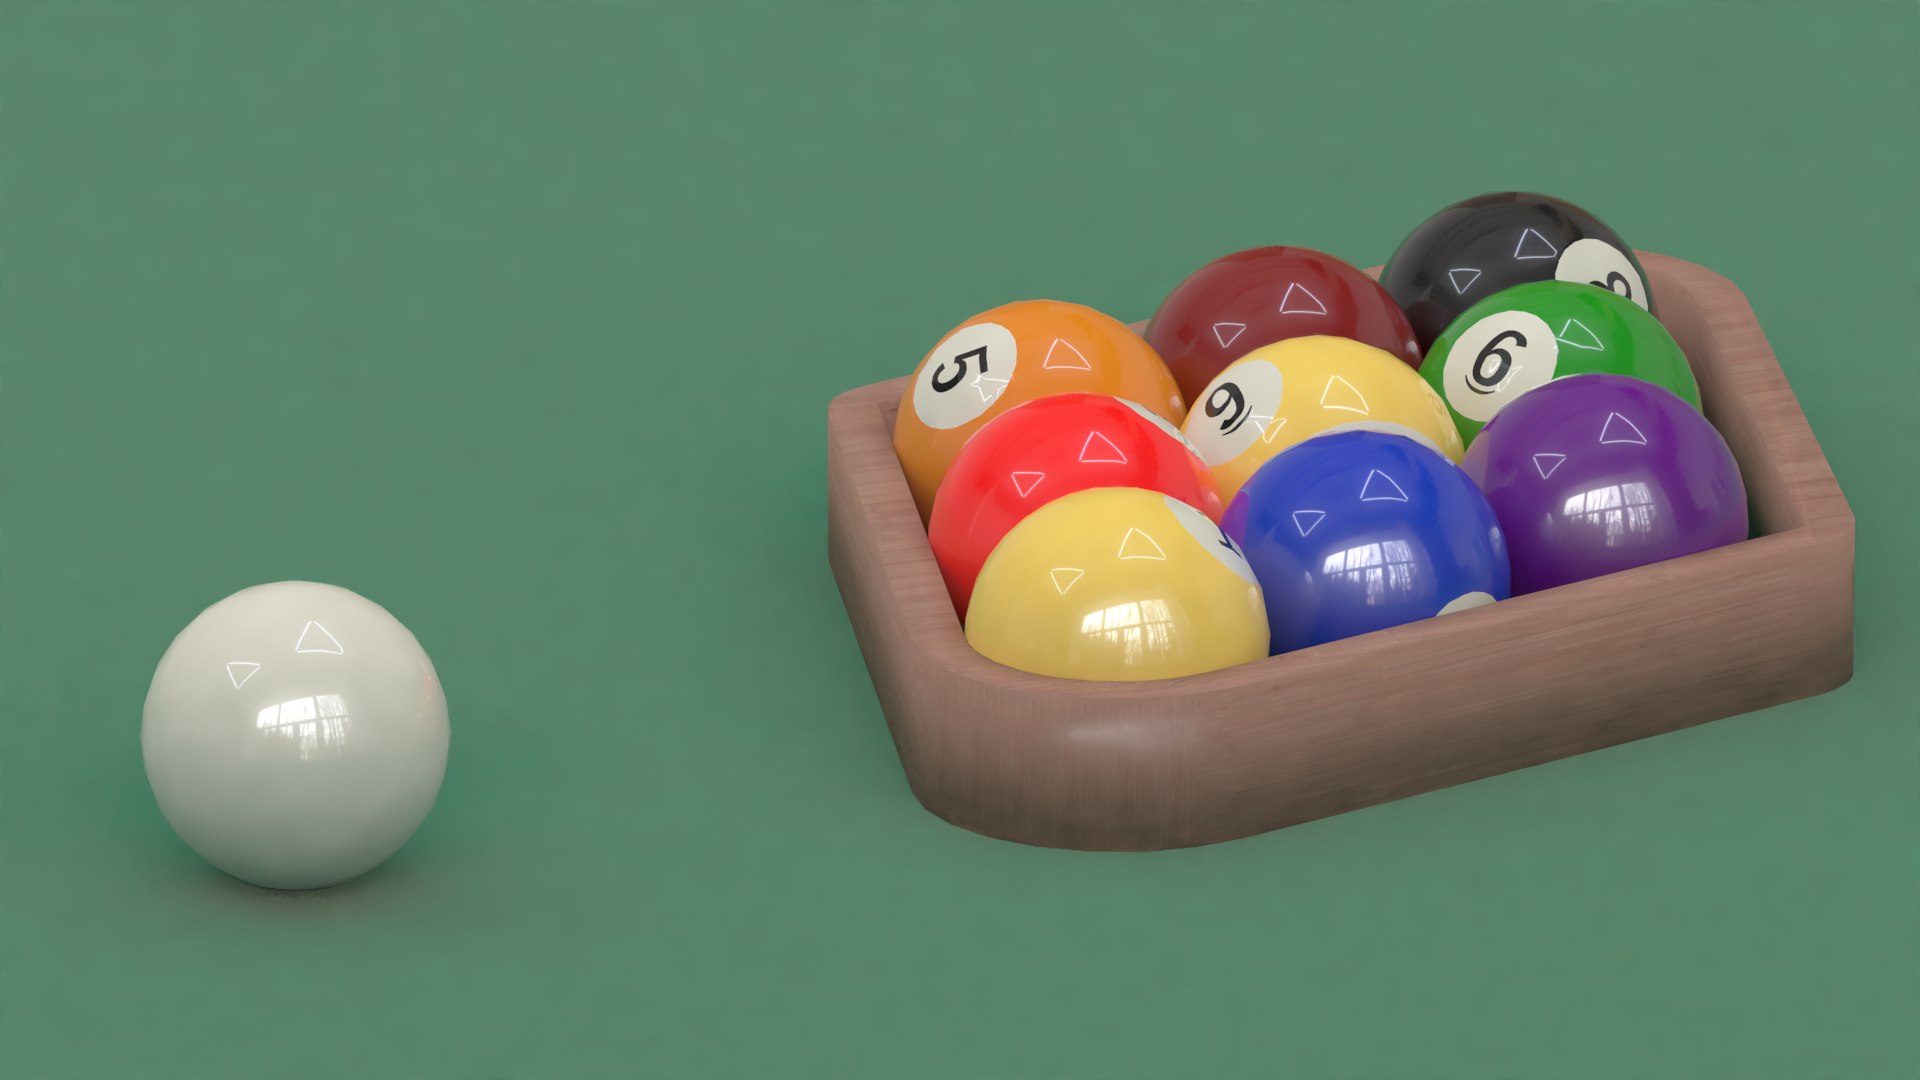 Pool Break 3D Billiards 8 Ball, 9 Ball, Snooker by Kinetic Bytes